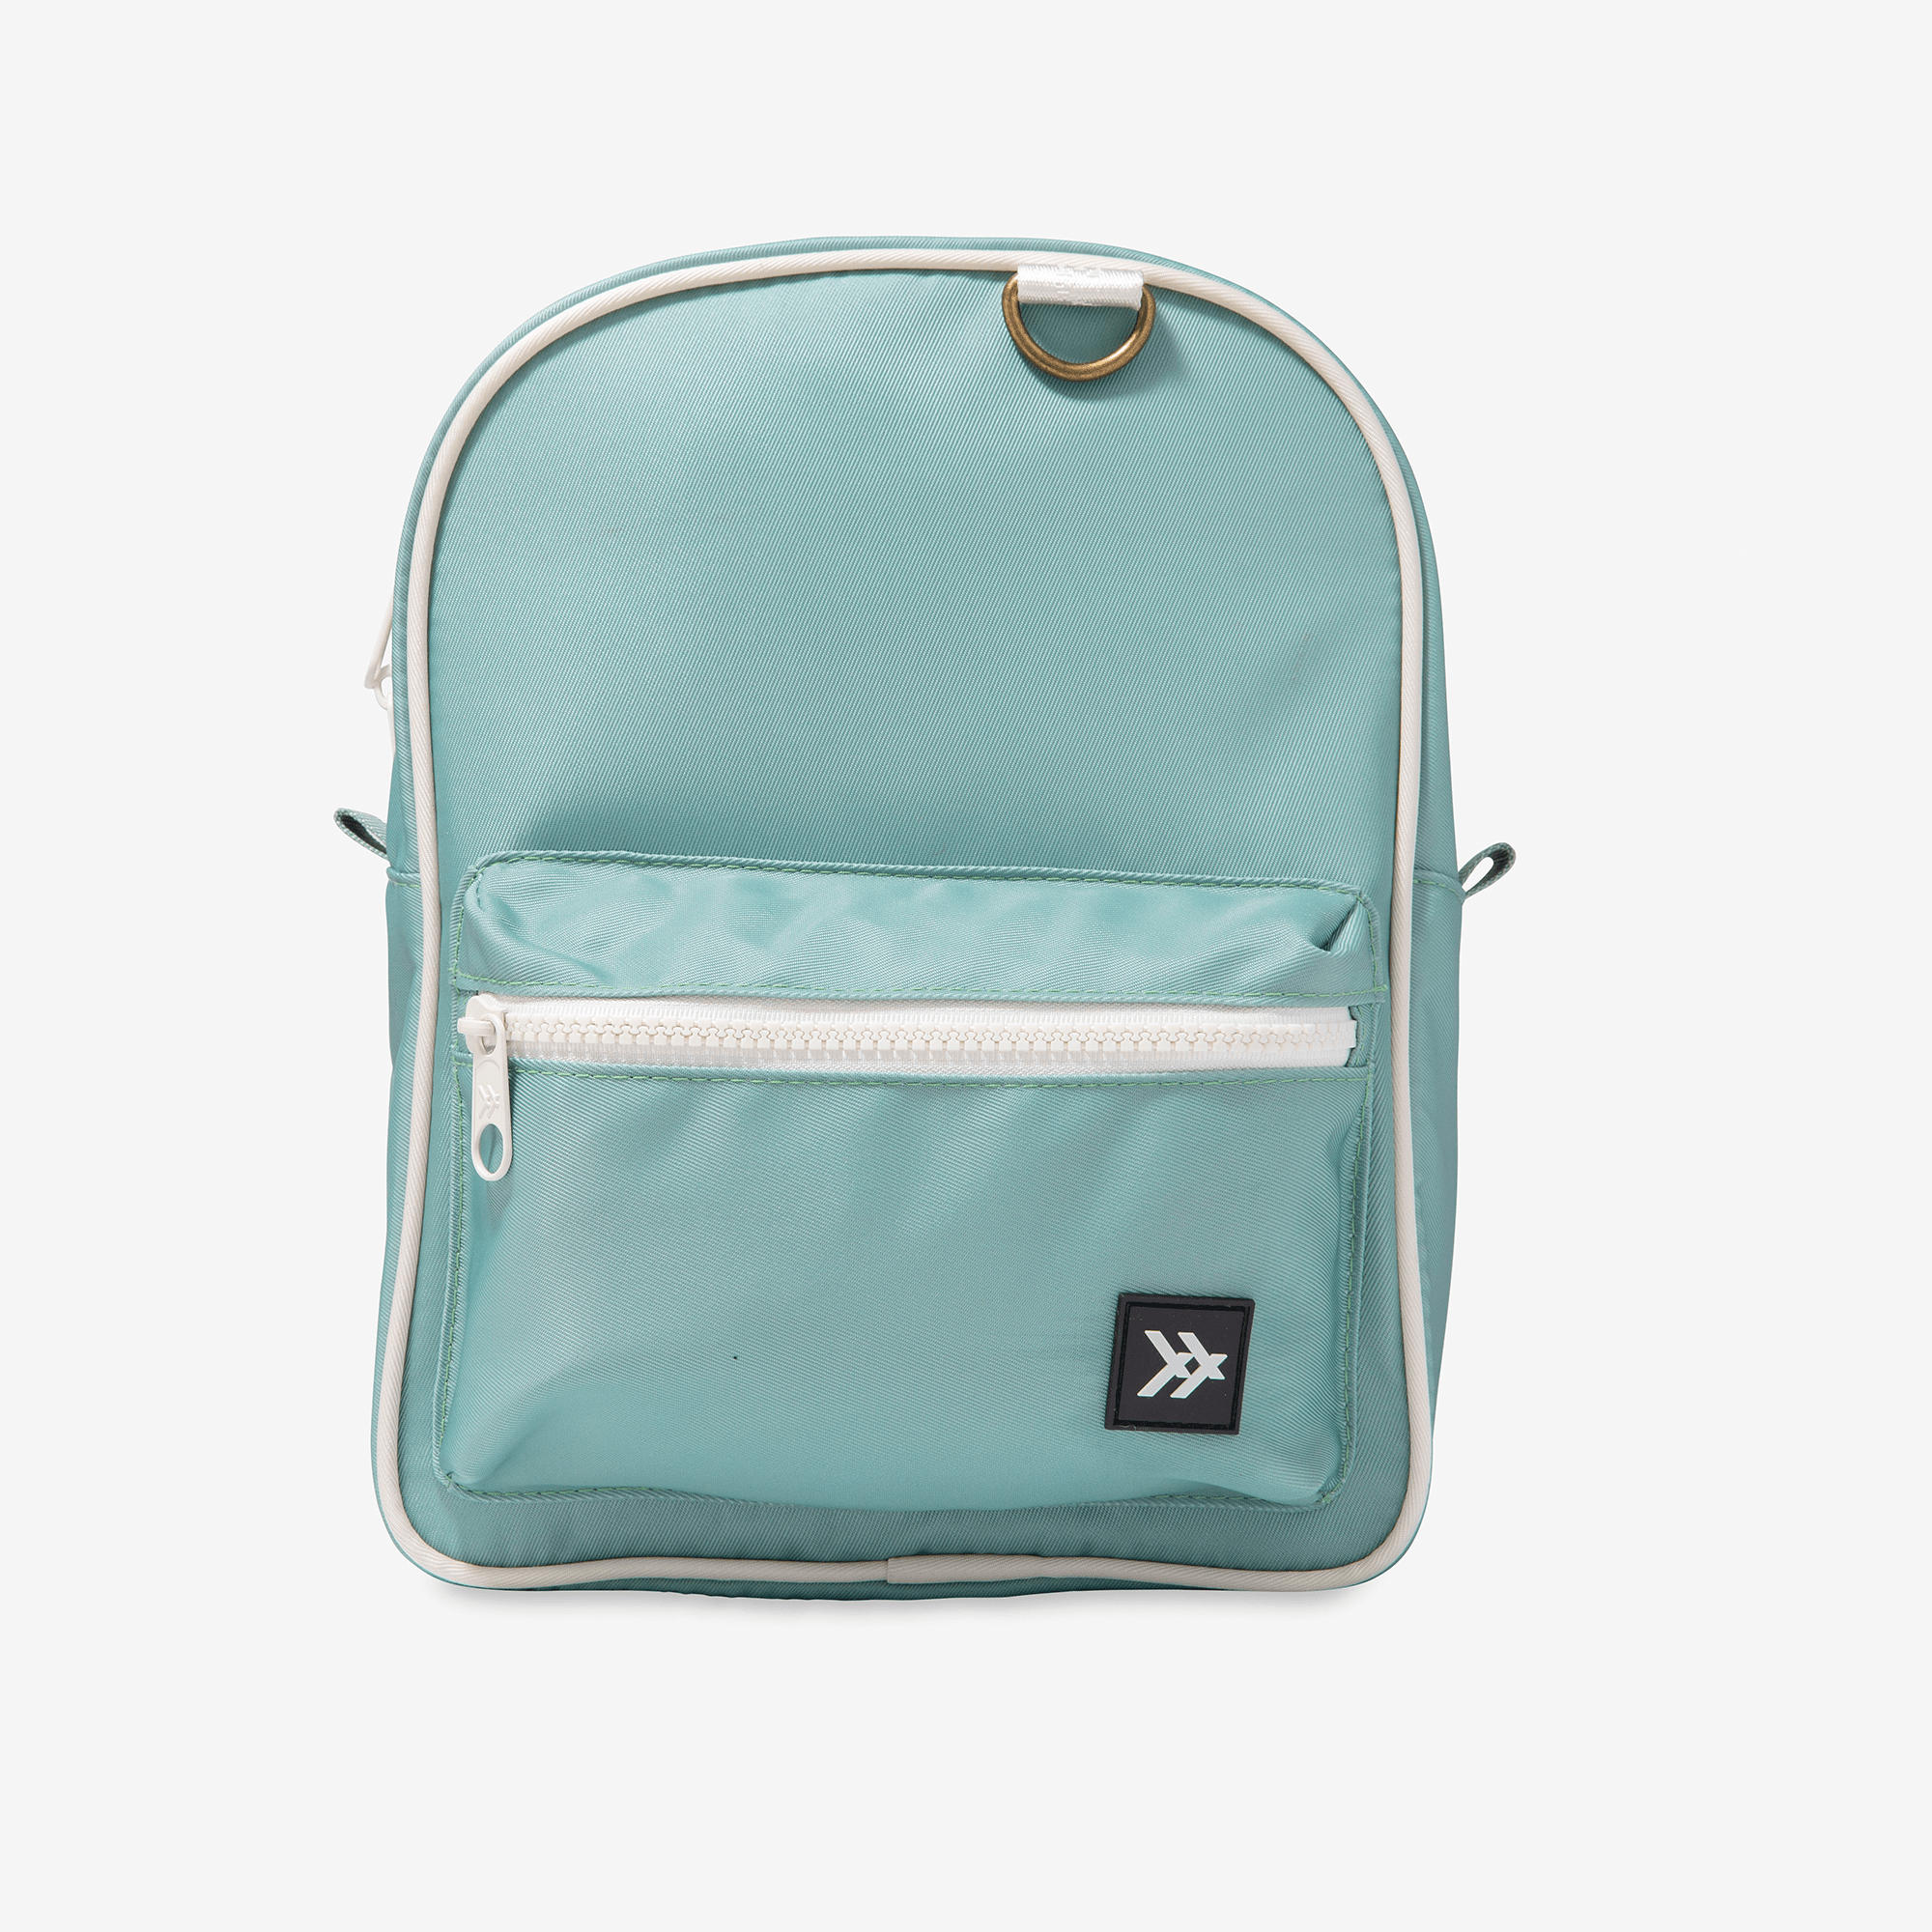 Turquoise mini backpack